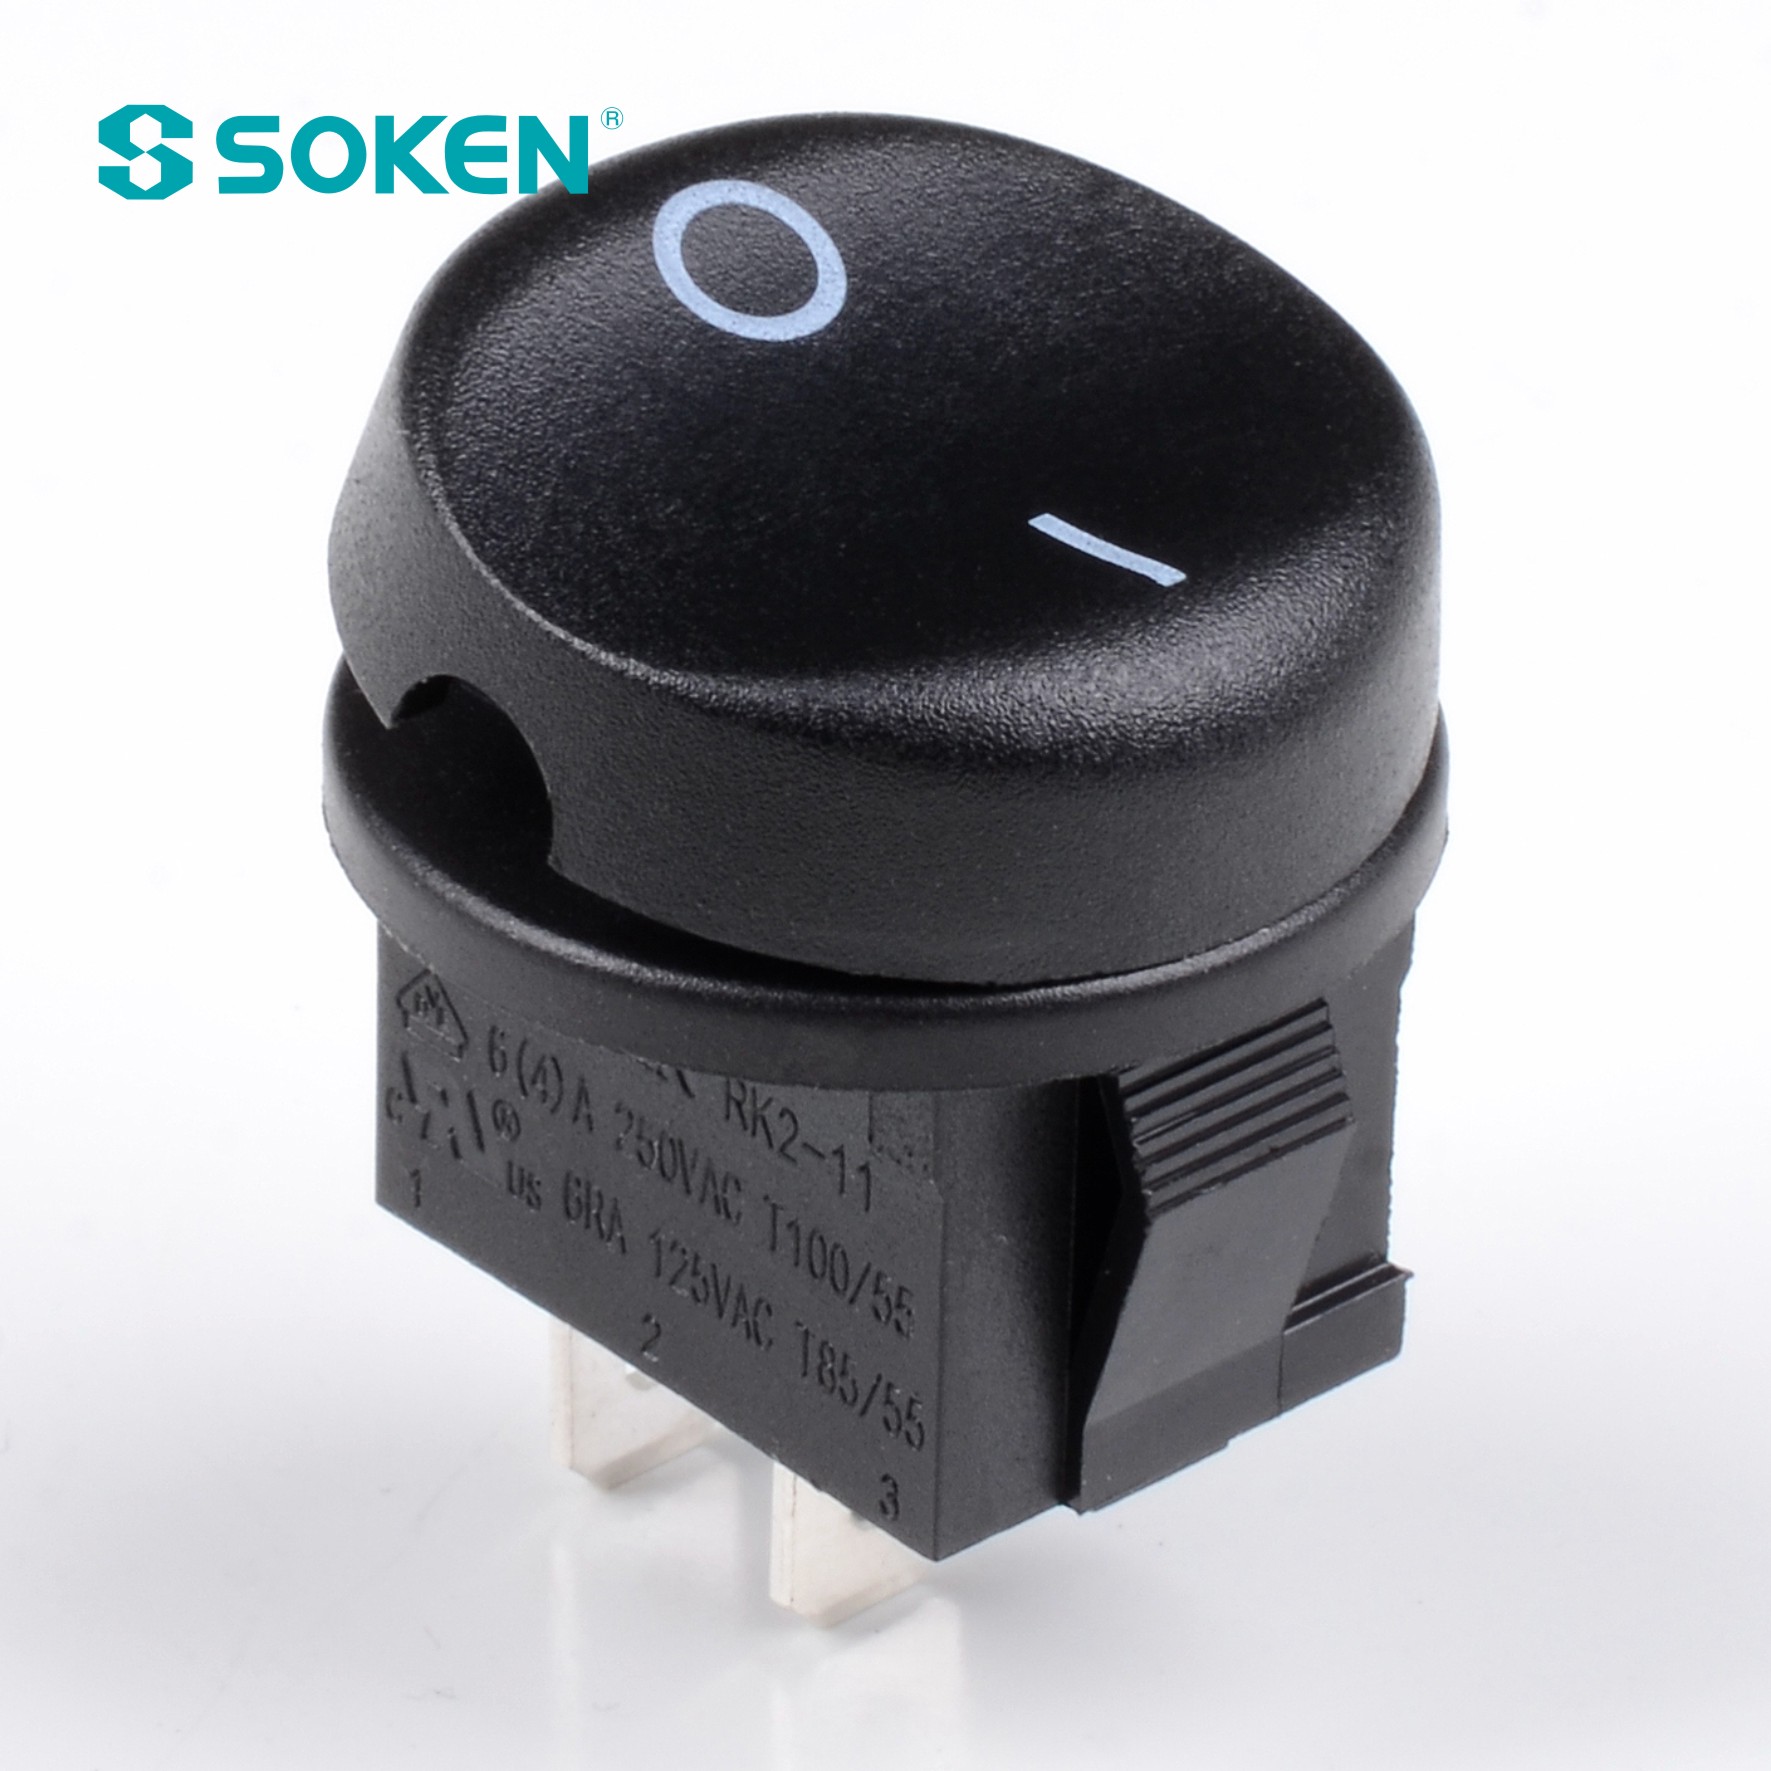 I-Soken Rk2-37b Rocker Switch